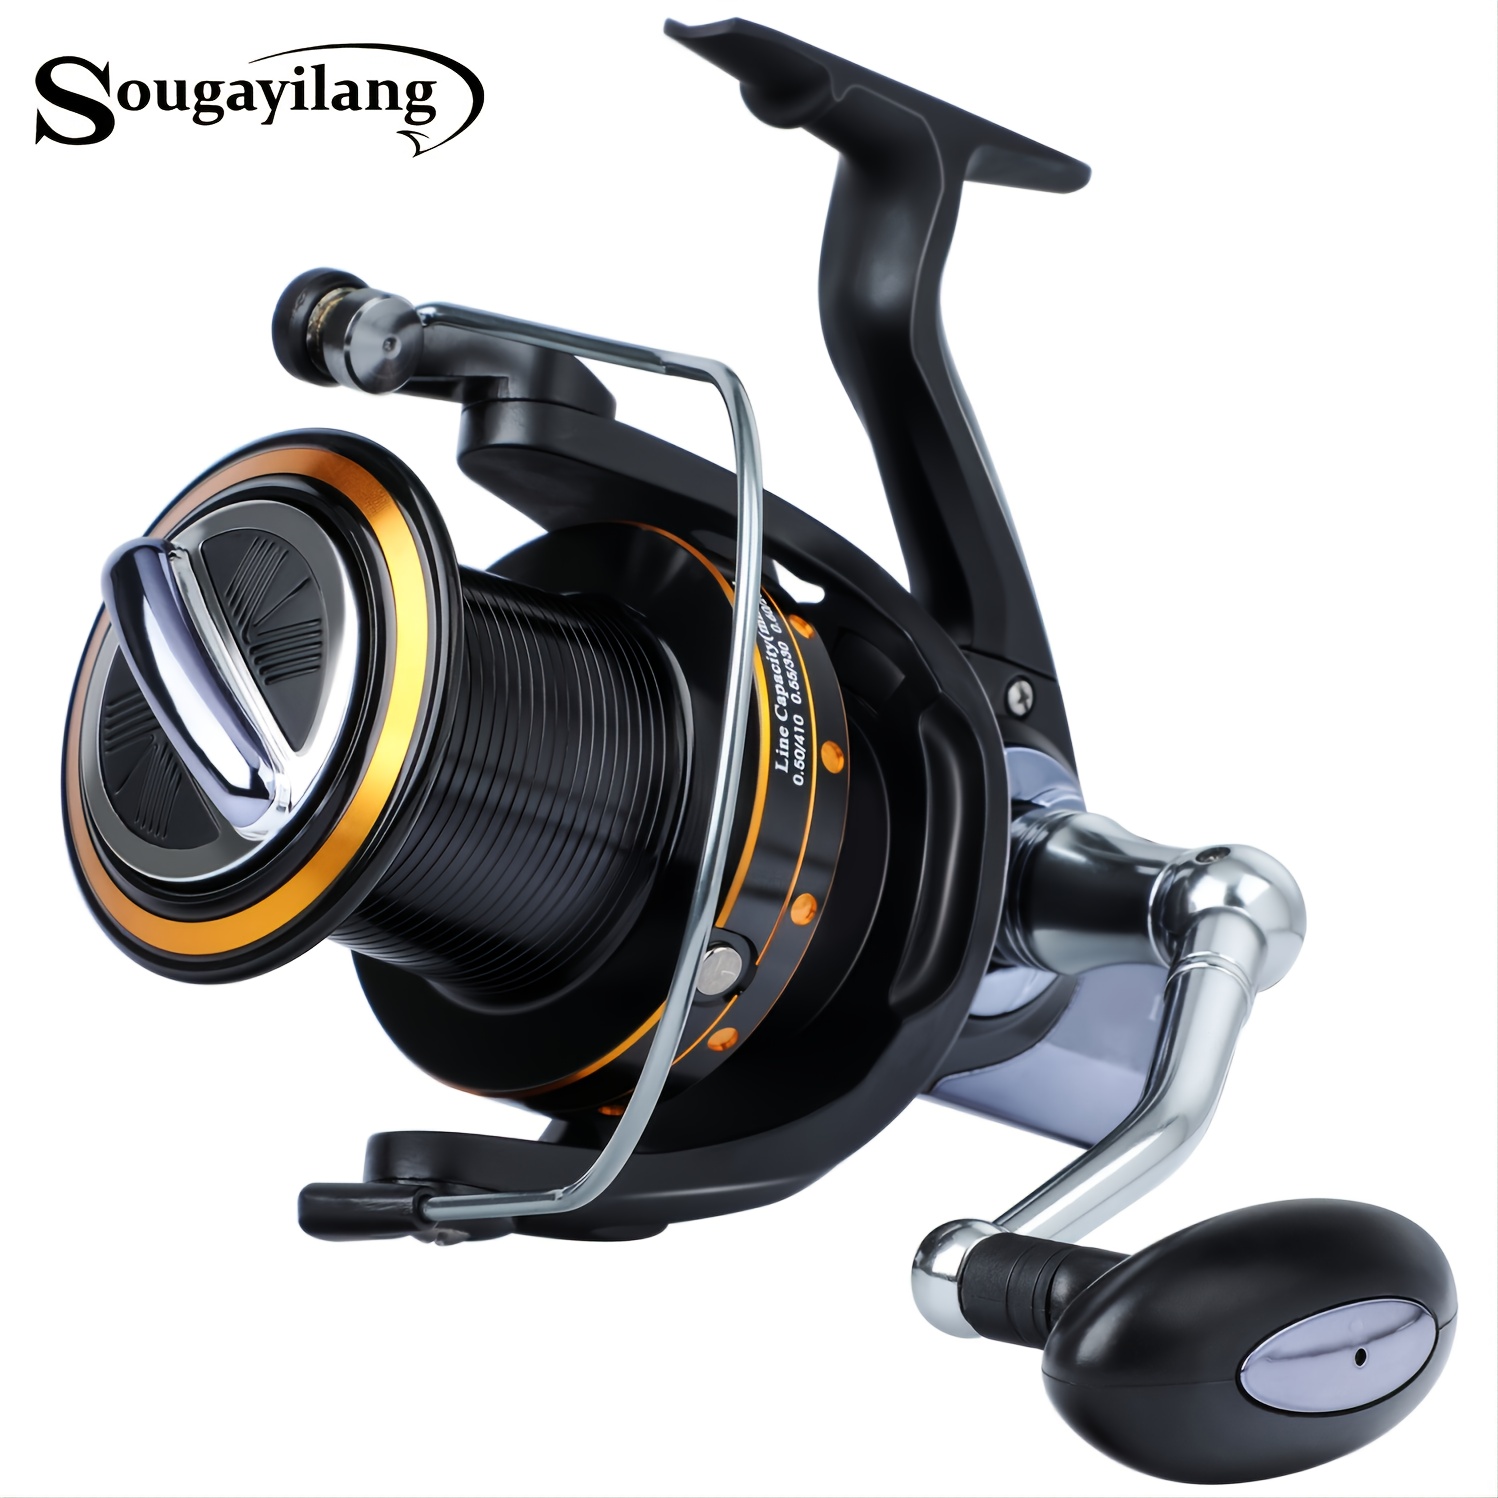 Sougayilang Spinning Fishing Reels - High Performance Reels for Sea Fishing  (6000-11000 Size)